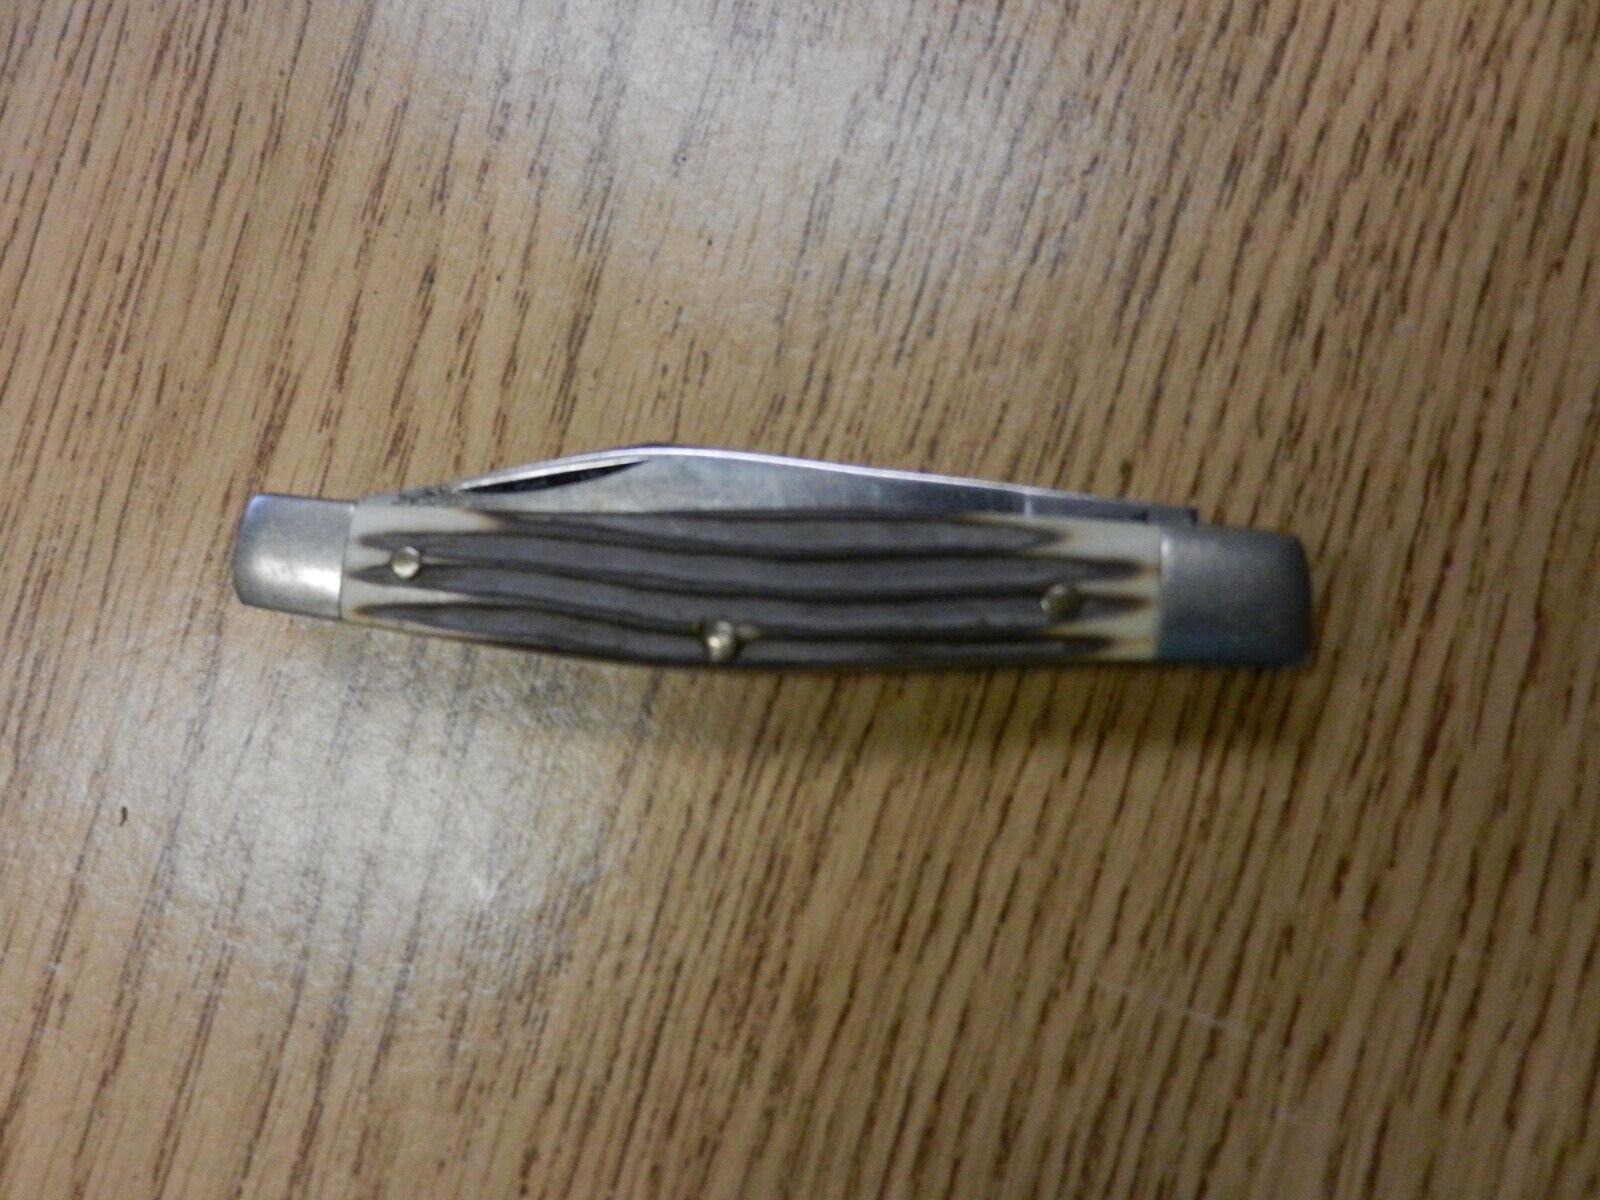 1979 Queen Steel #2 2 Blade Pocket Knife W/ delrin Handles 3 1/4\